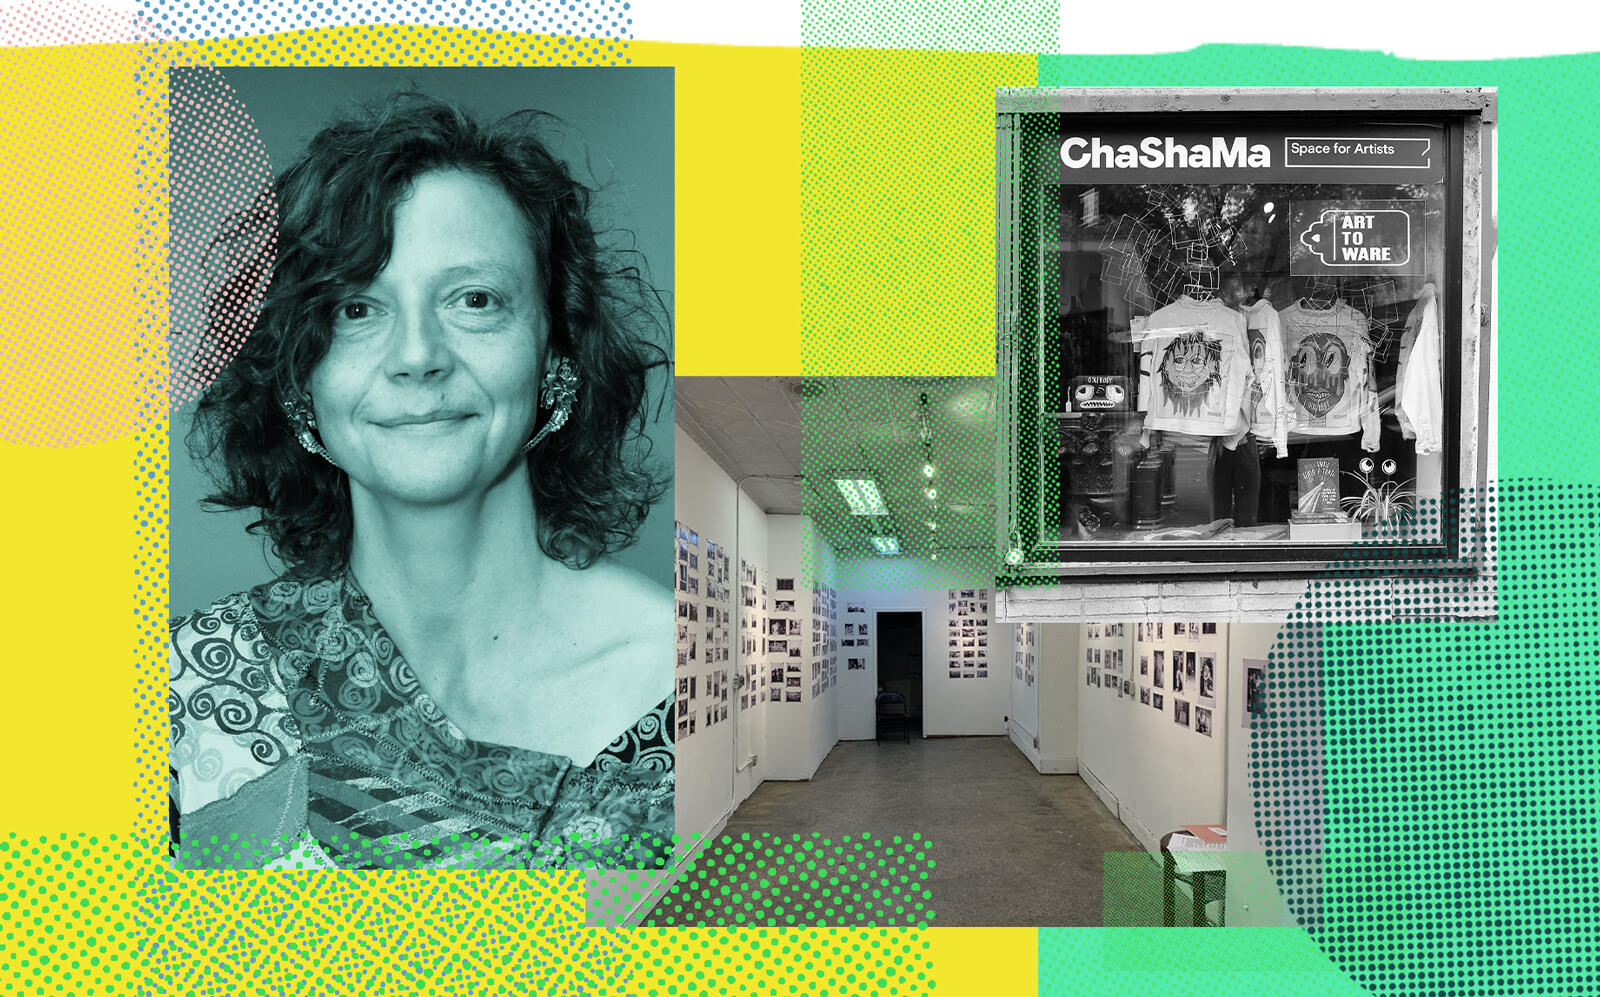 Anita Durst and images of Chashama (Photos via Getty, Chashama)